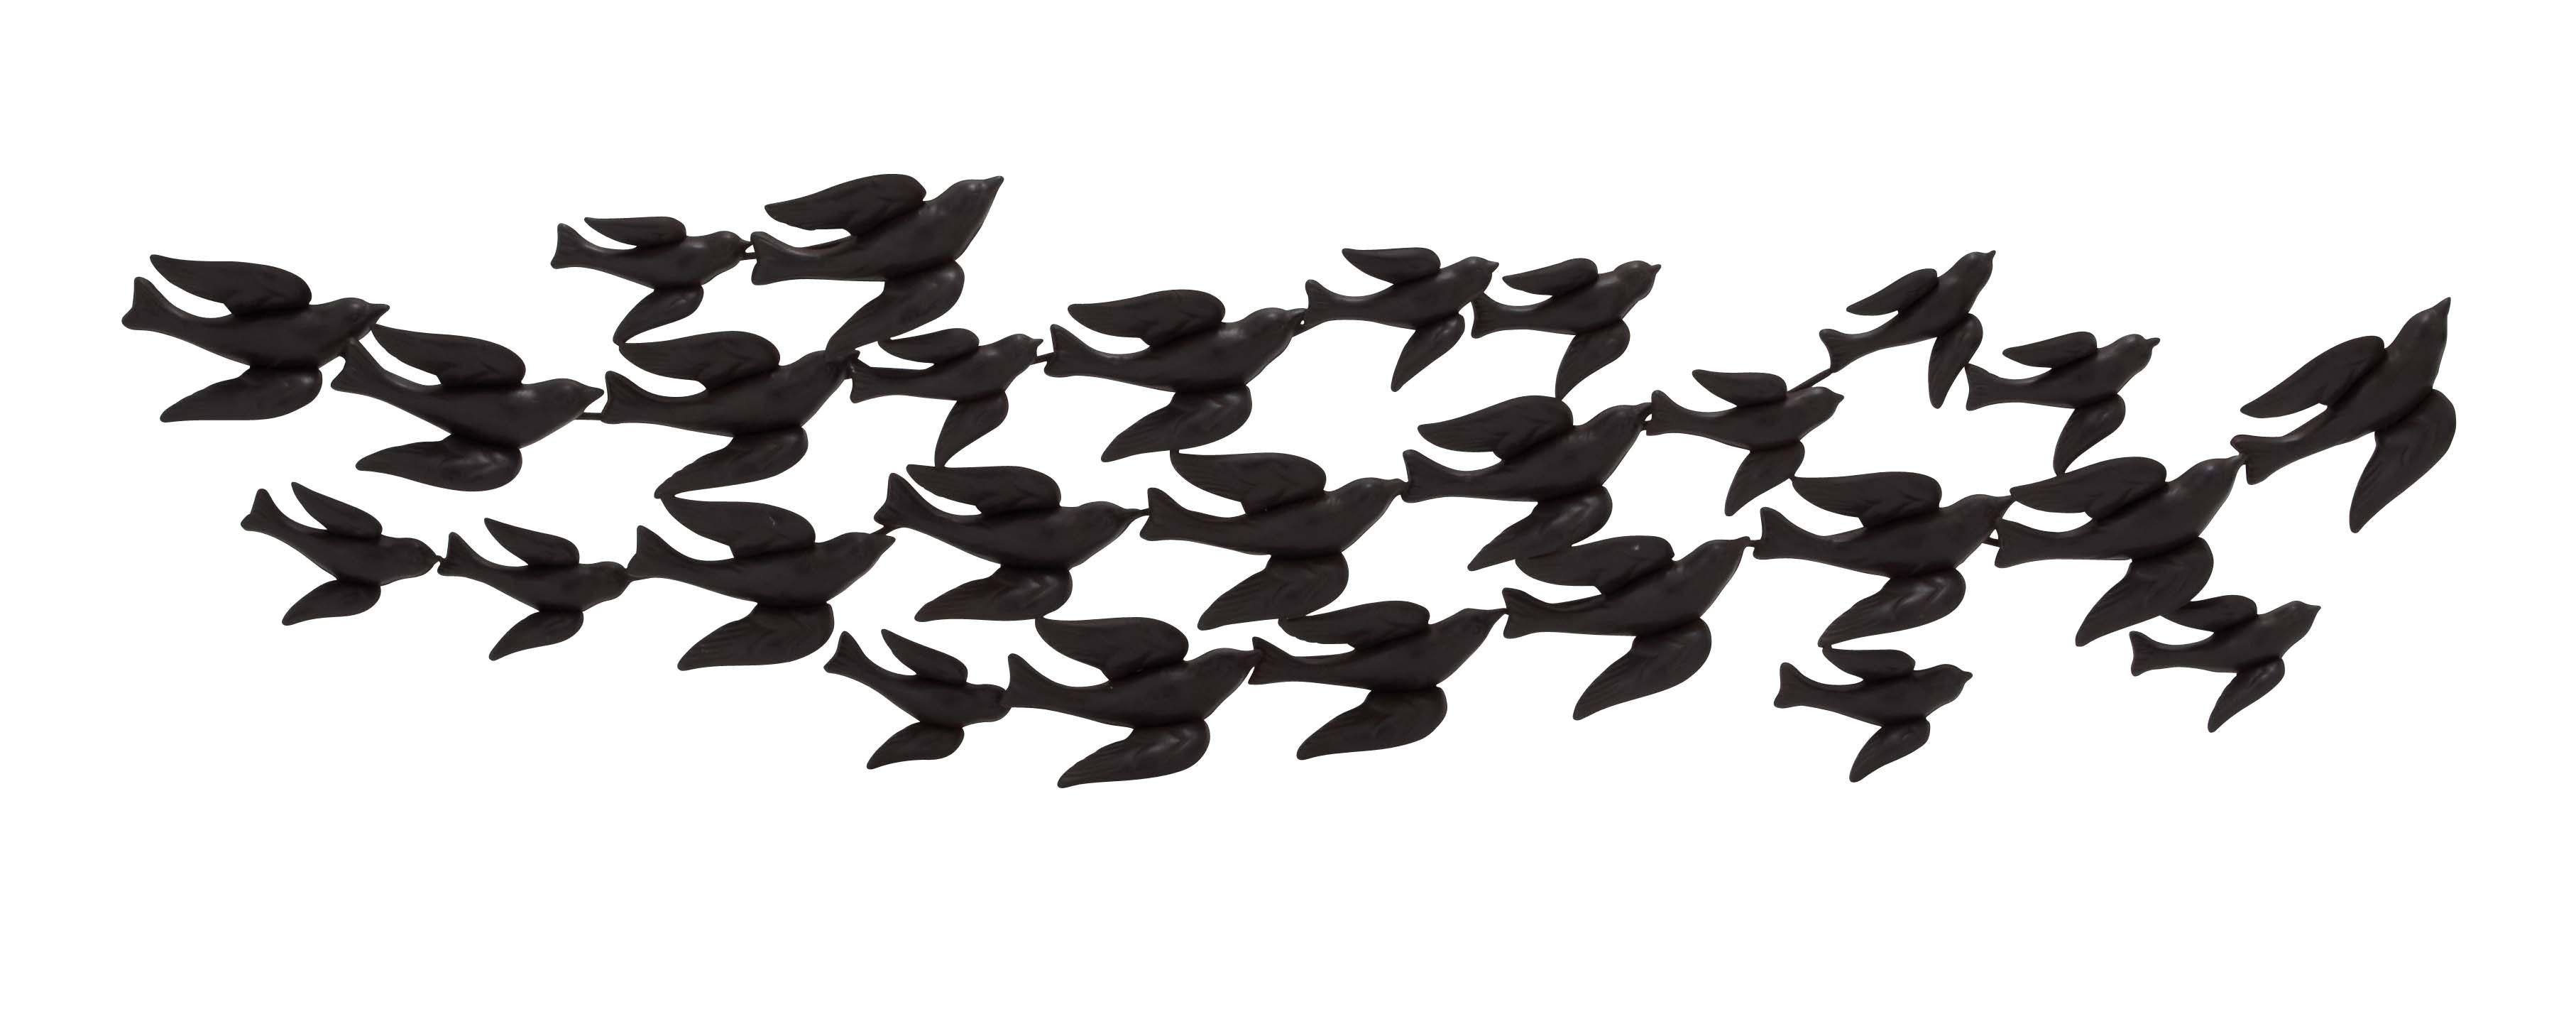 Flock of flying birds carved in metal